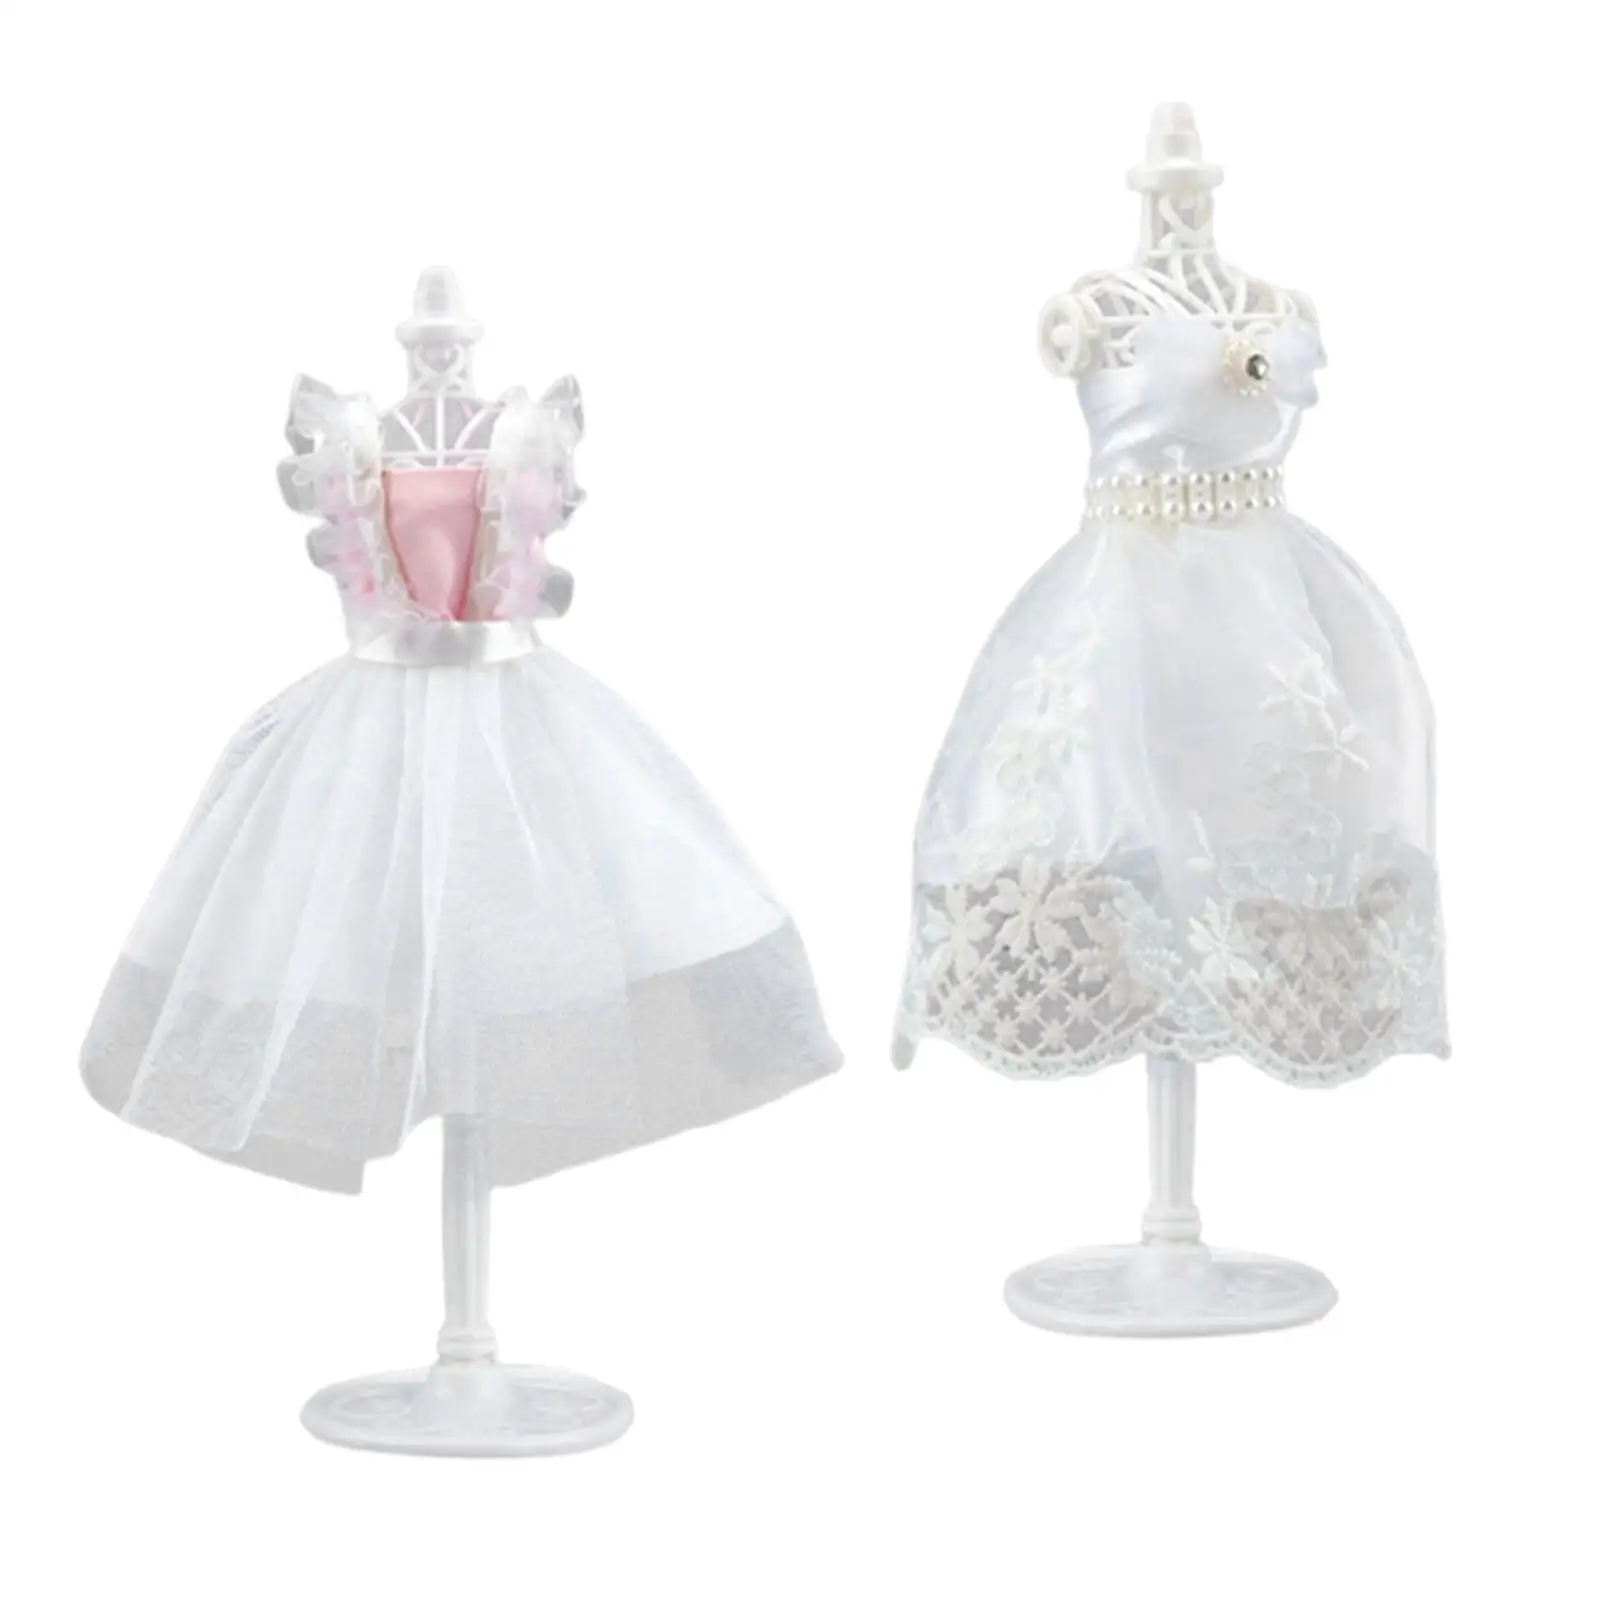 Doll Clothing design Princess Dress Clothes Set Creativity dress up Learning